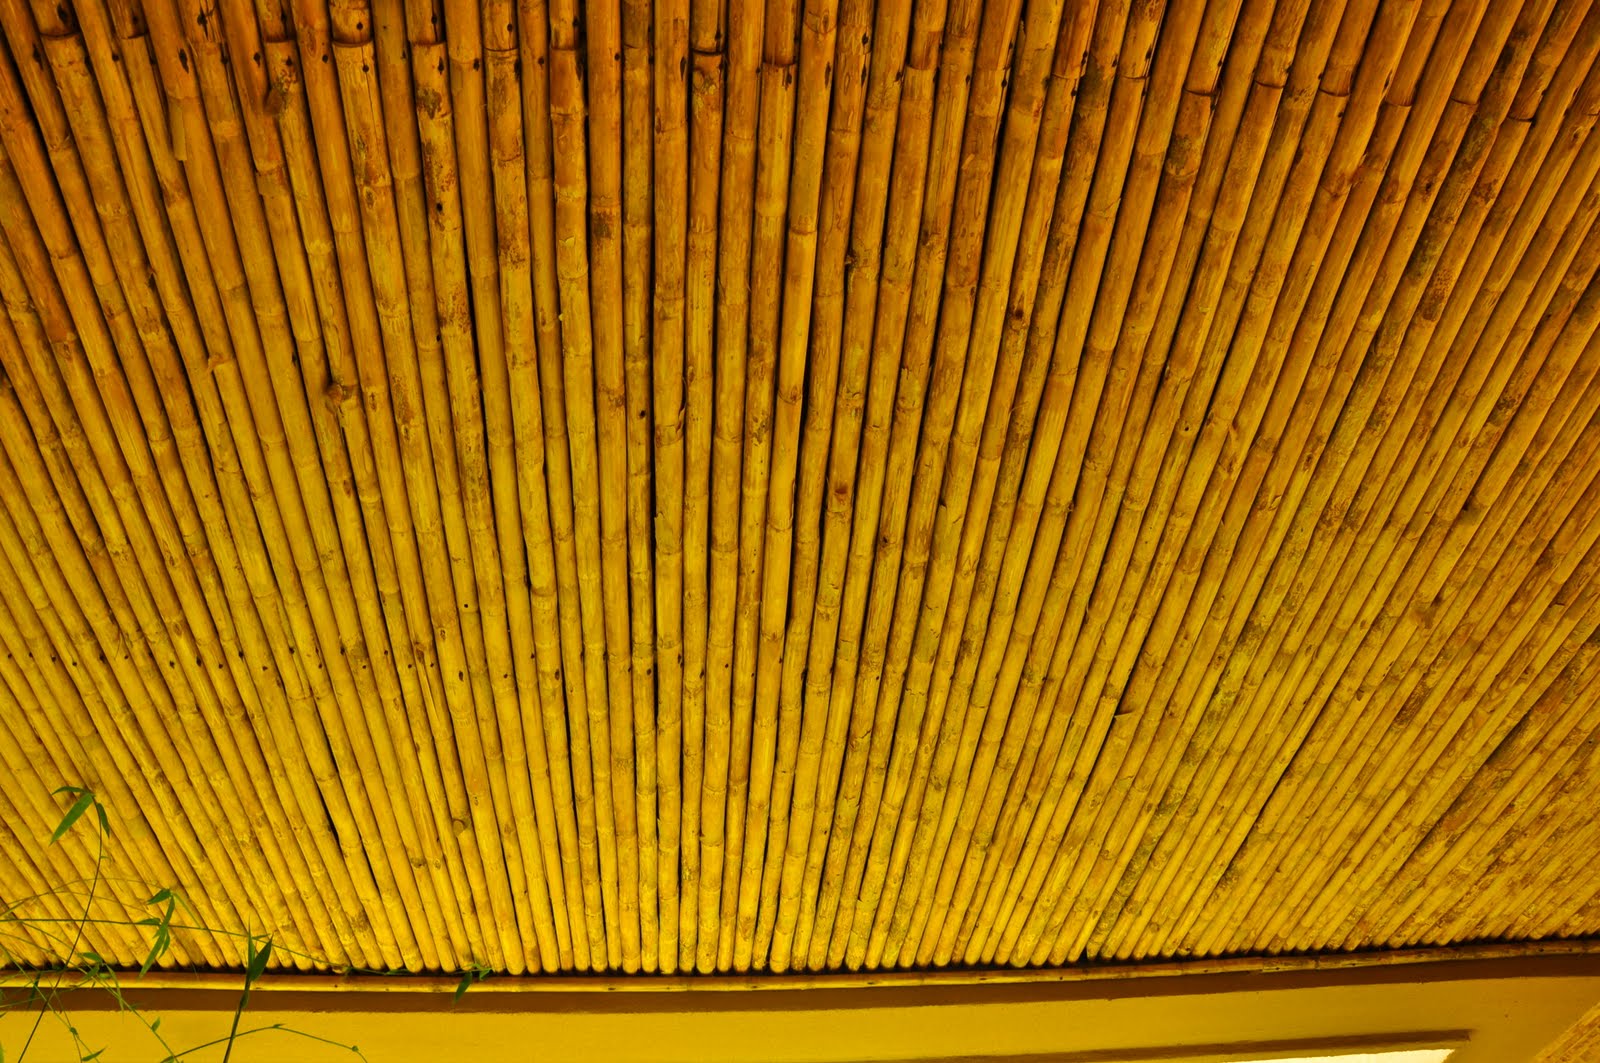 Tamarindo, Costa Rica Daily Photo: Bamboo ceiling